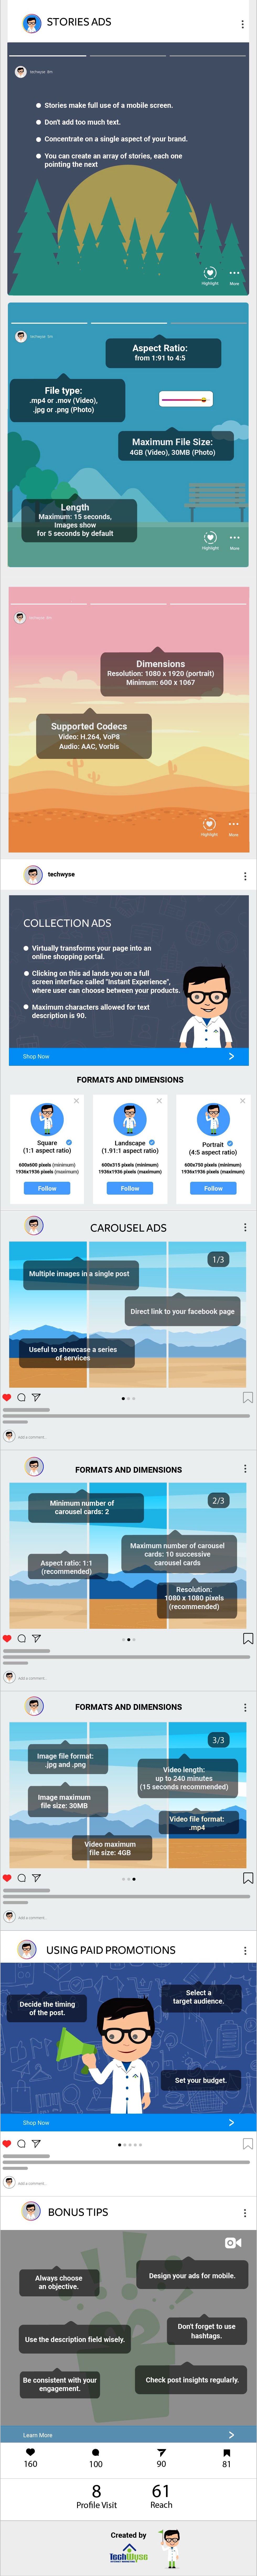 Instagram business account infographics compressor